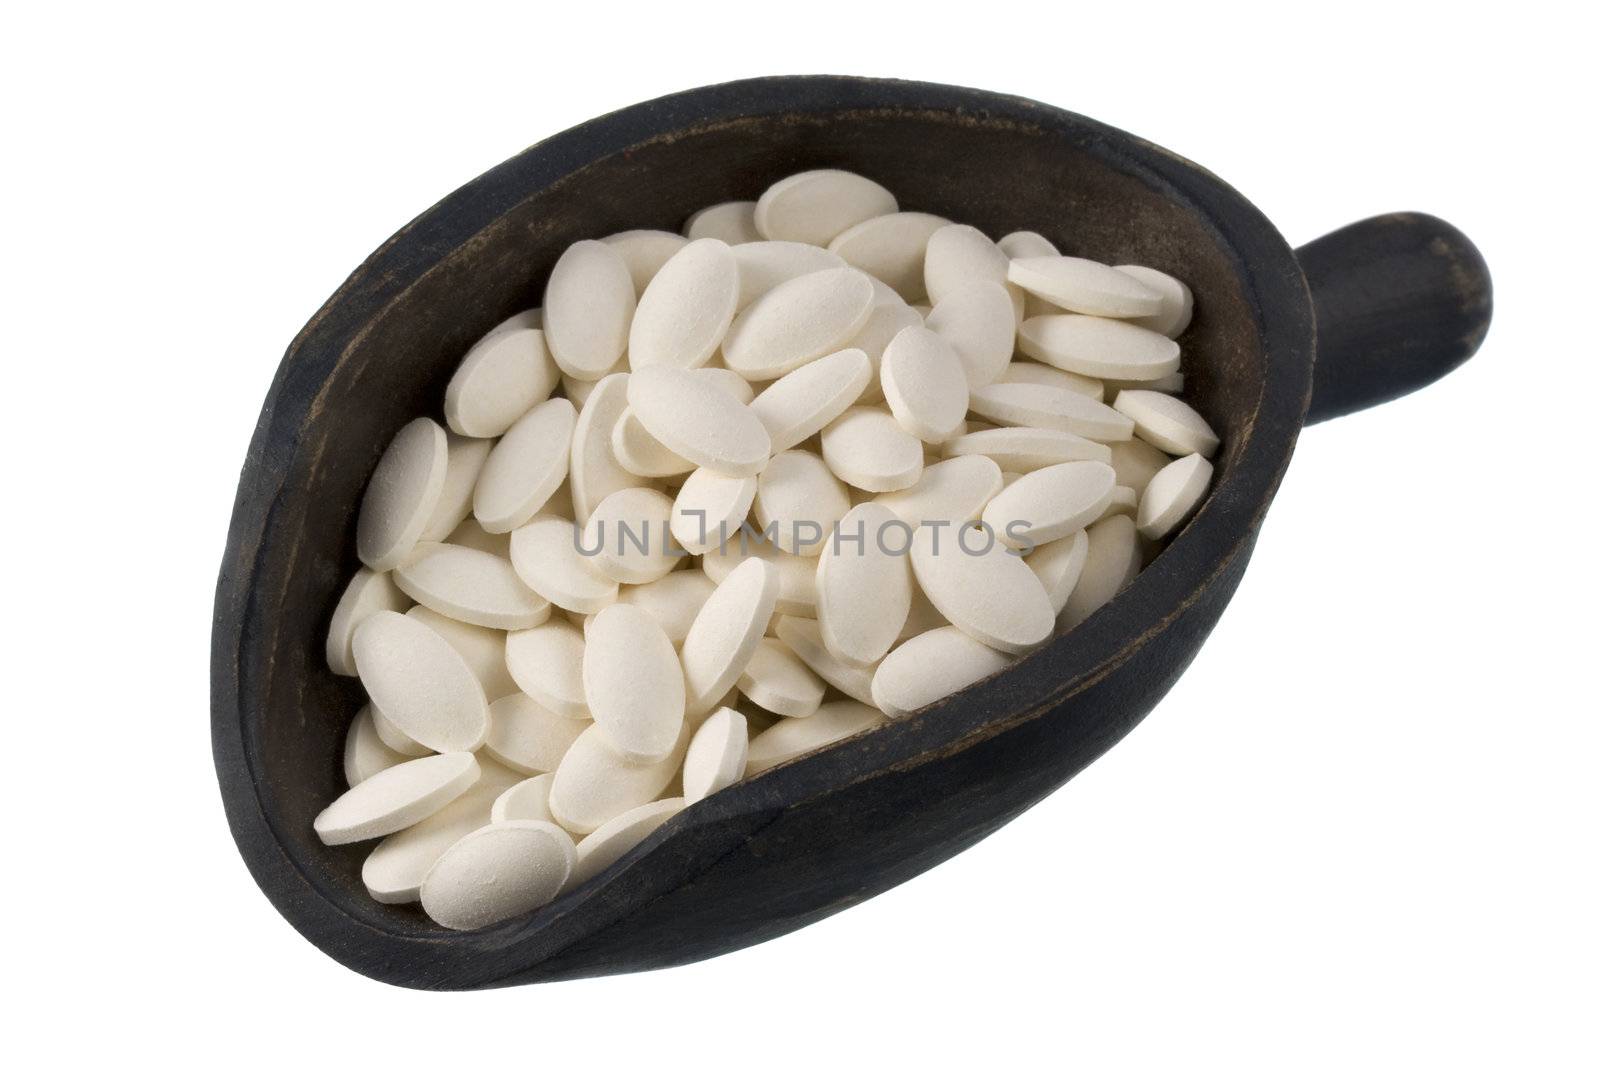 scoop of white dietary supplement pills by PixelsAway